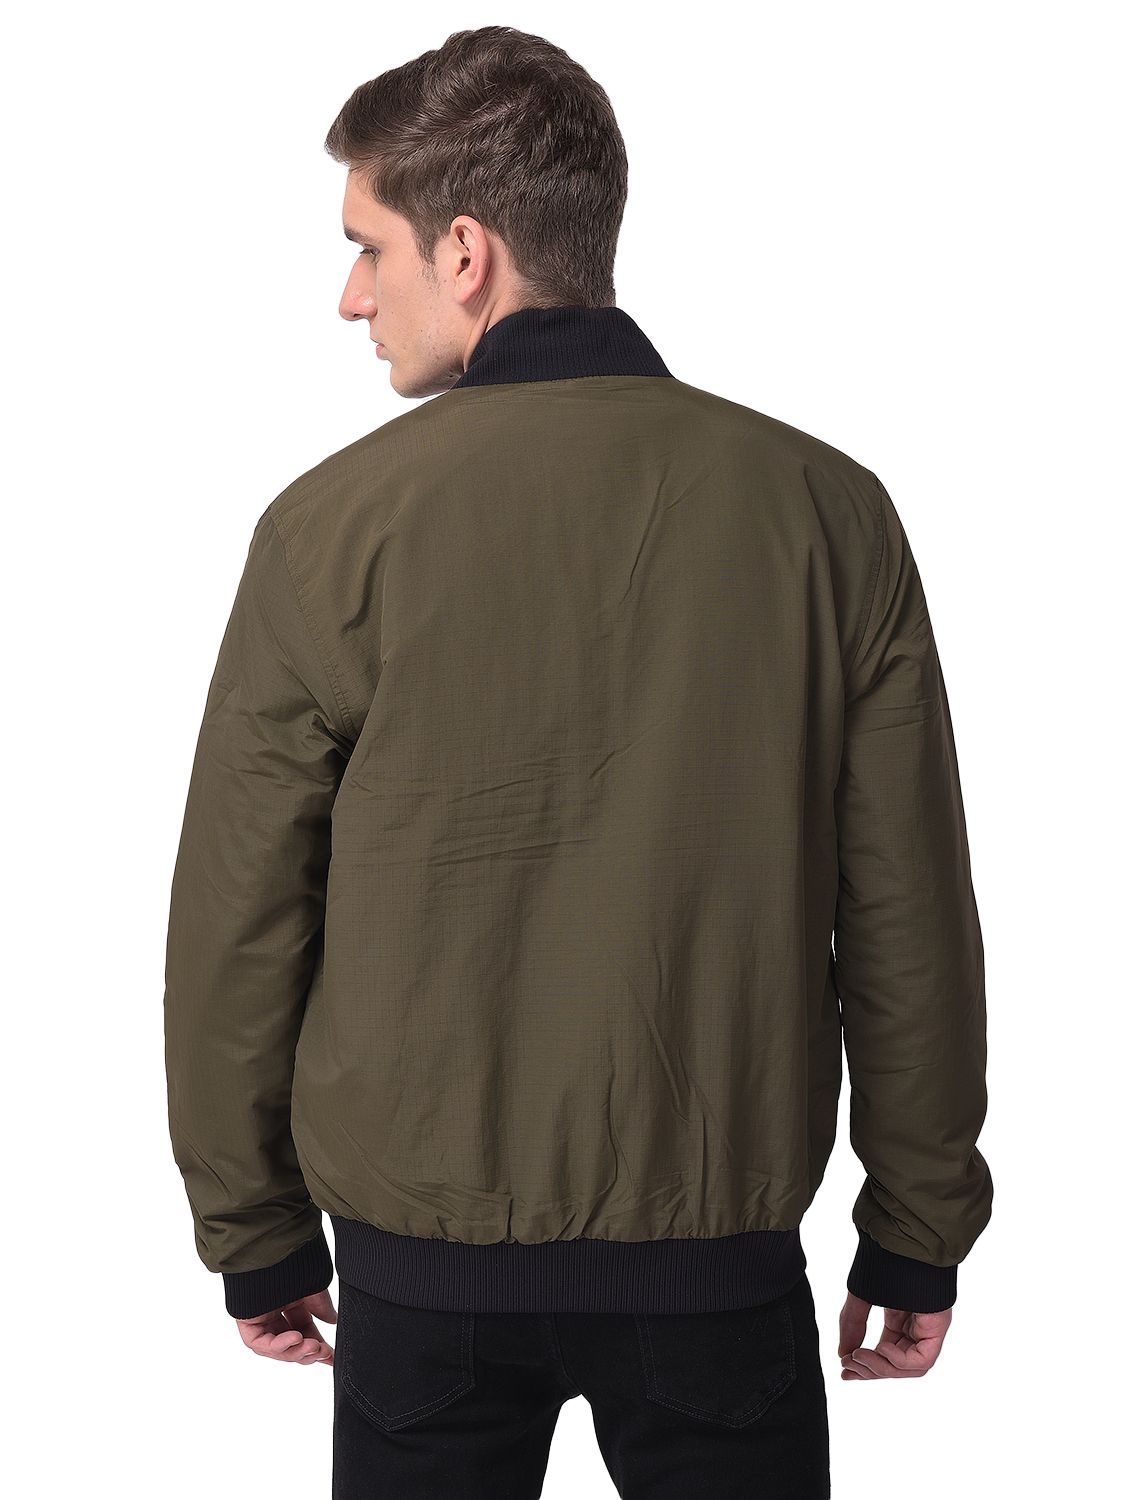 Olive night bomber jacket for men